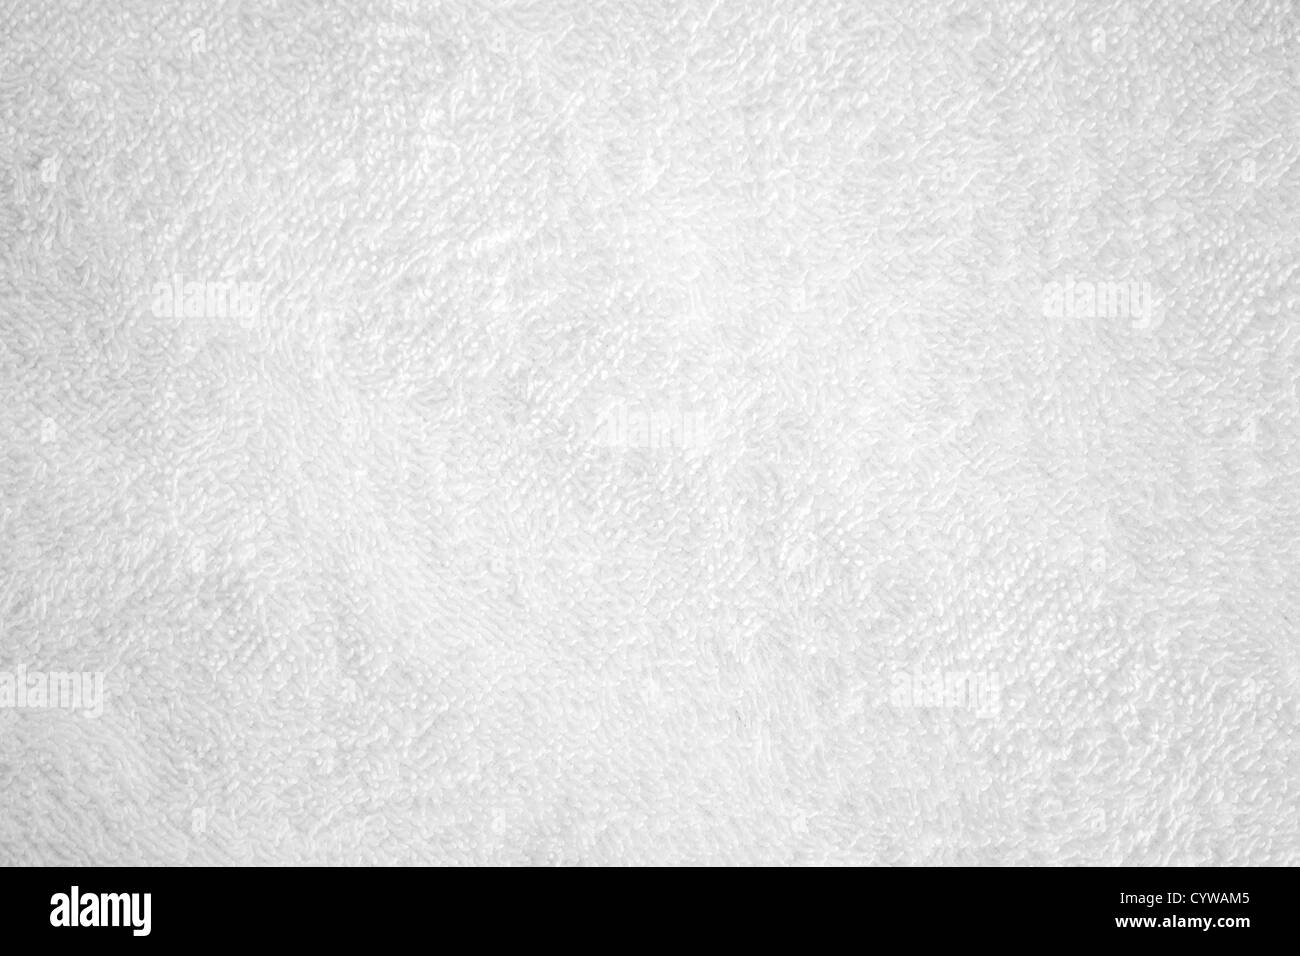 White natural cotton towel closeup background texture Stock Photo